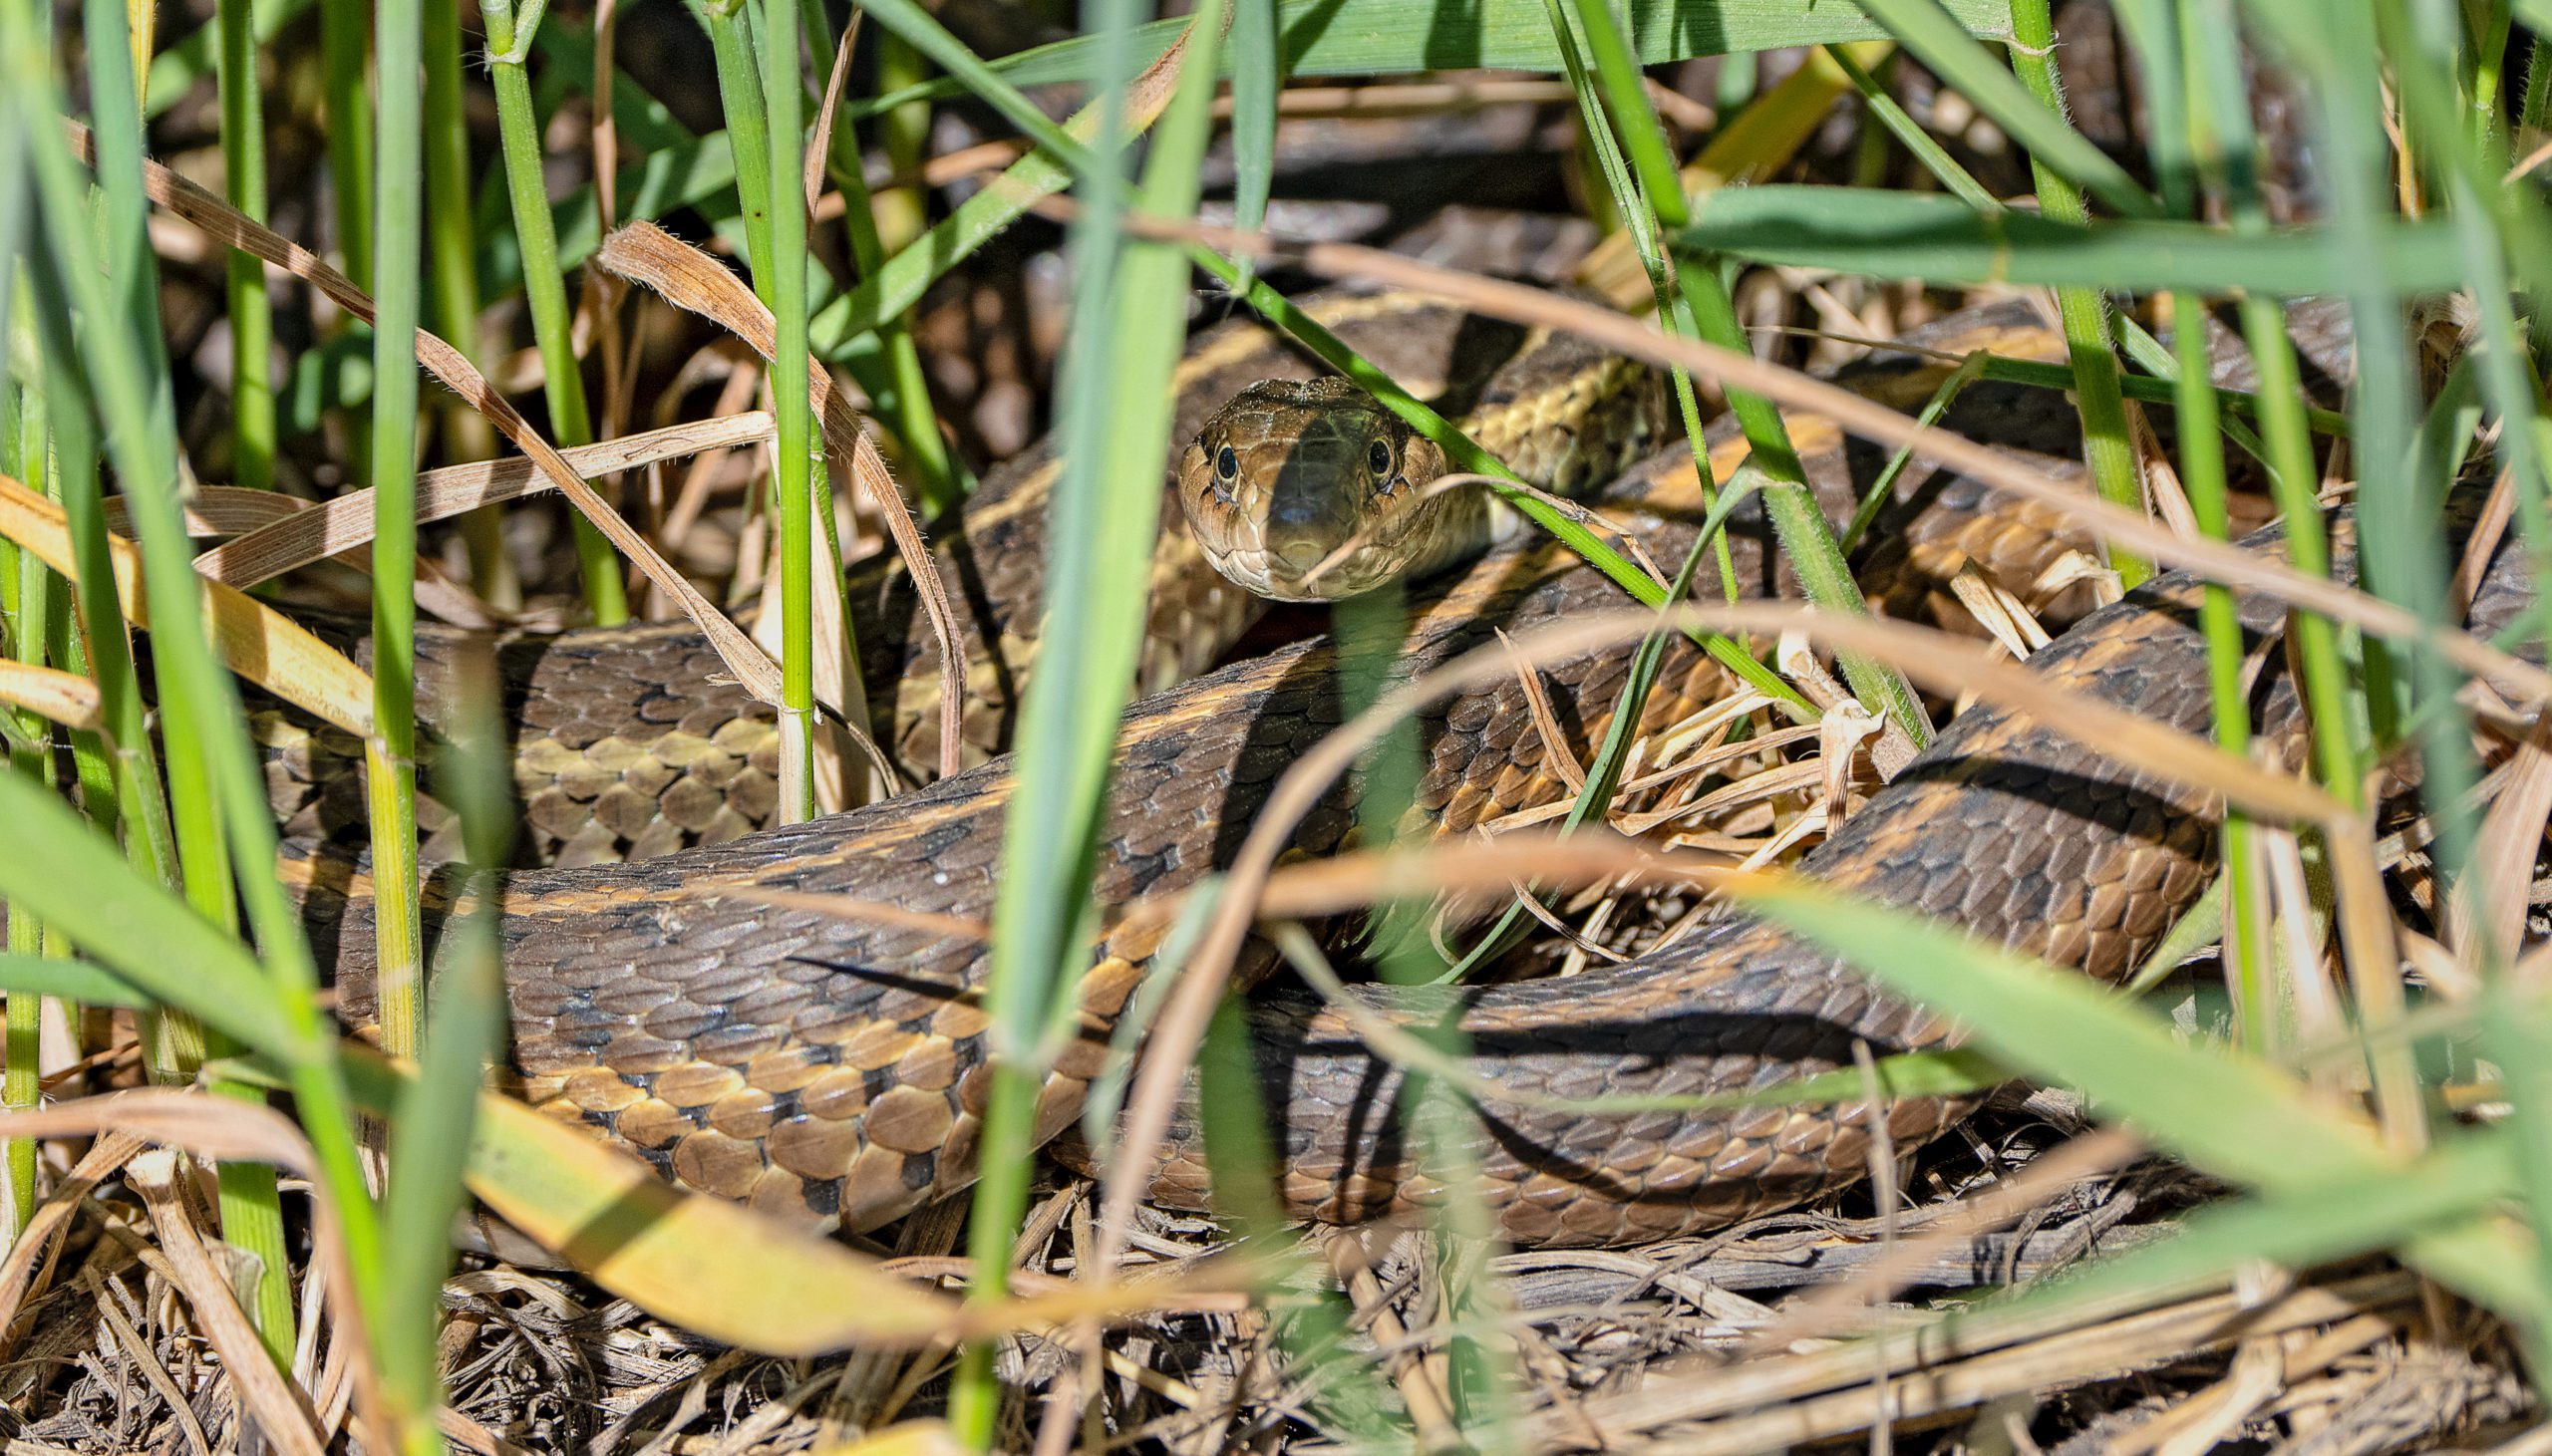 A western terrestrial garter snake.